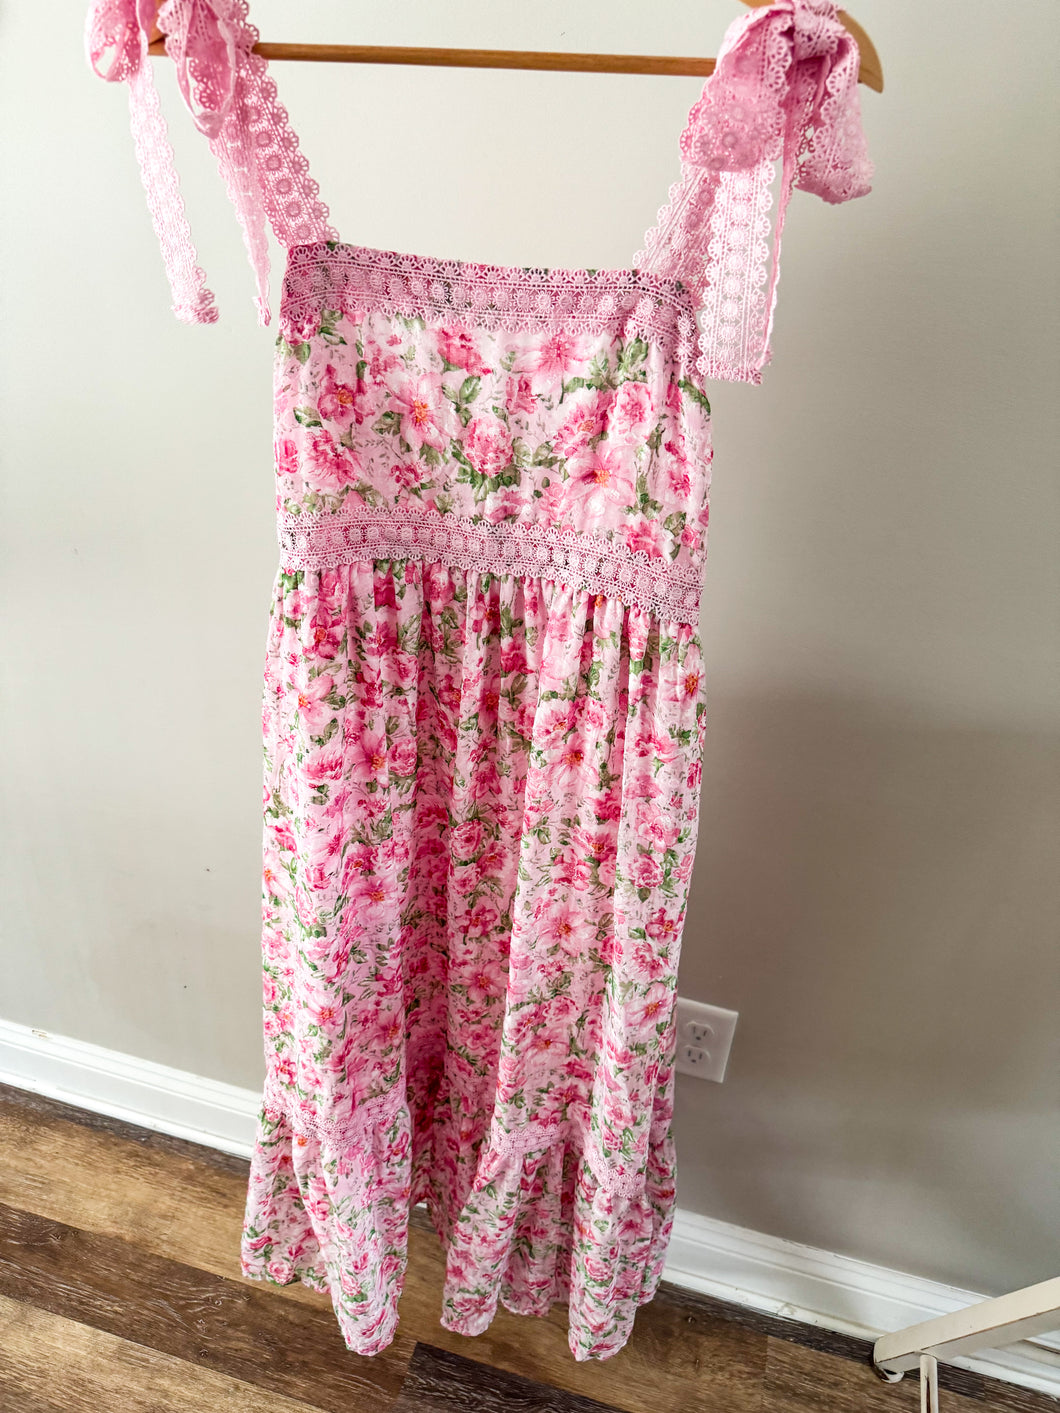 Prettiest Pink floral middi dress with lace trim